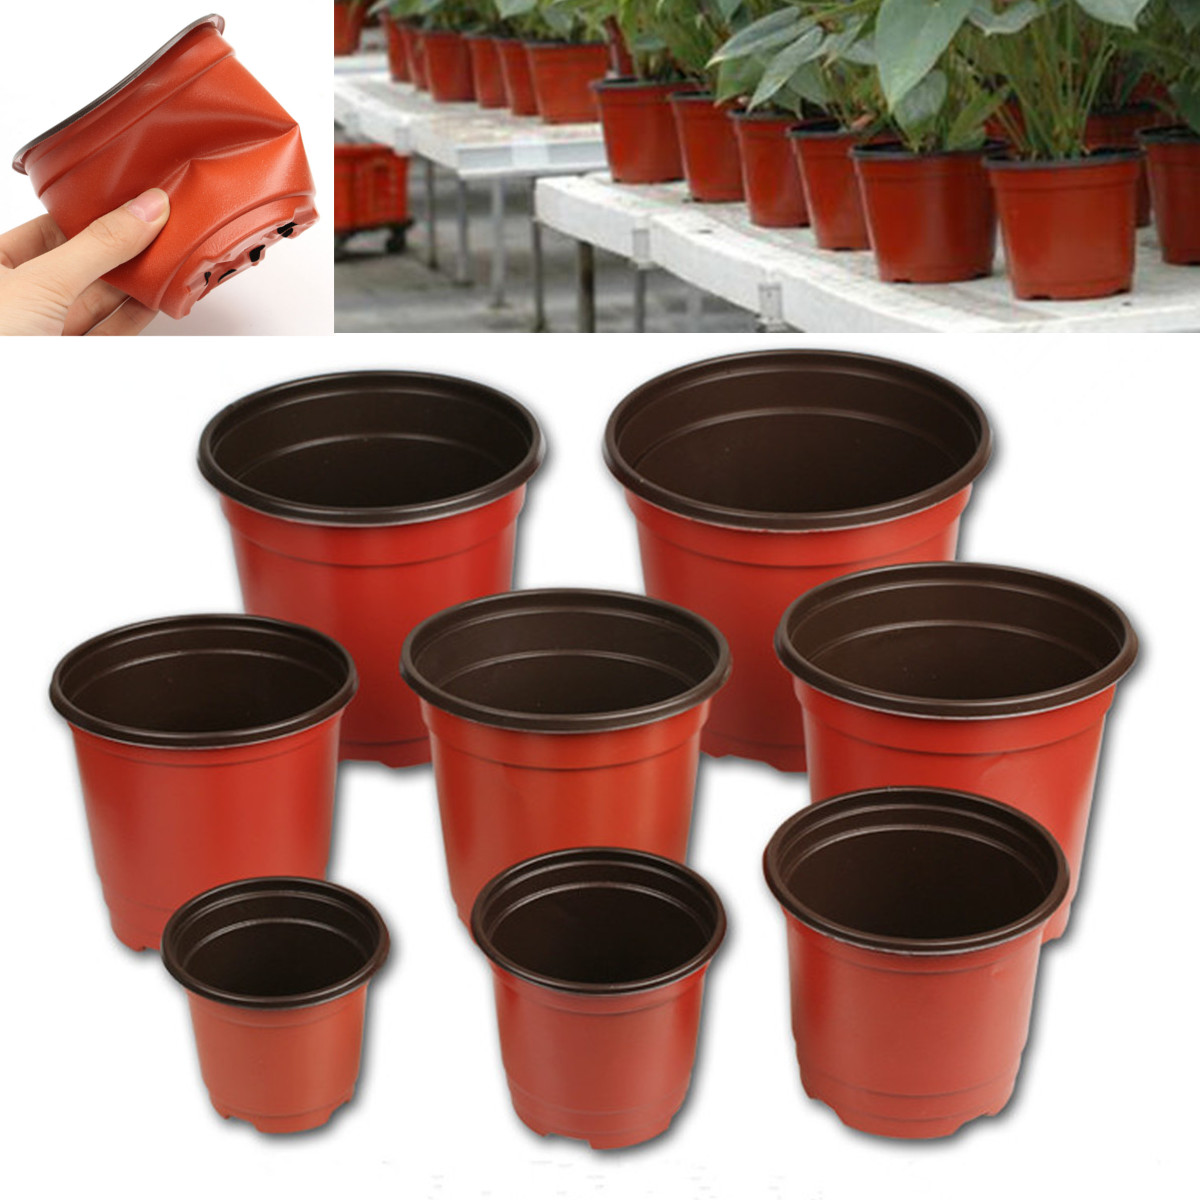 100Pcs Plastic Garden Nursery Pot Flower Terracotta Seedlings Planter Containers Set 4